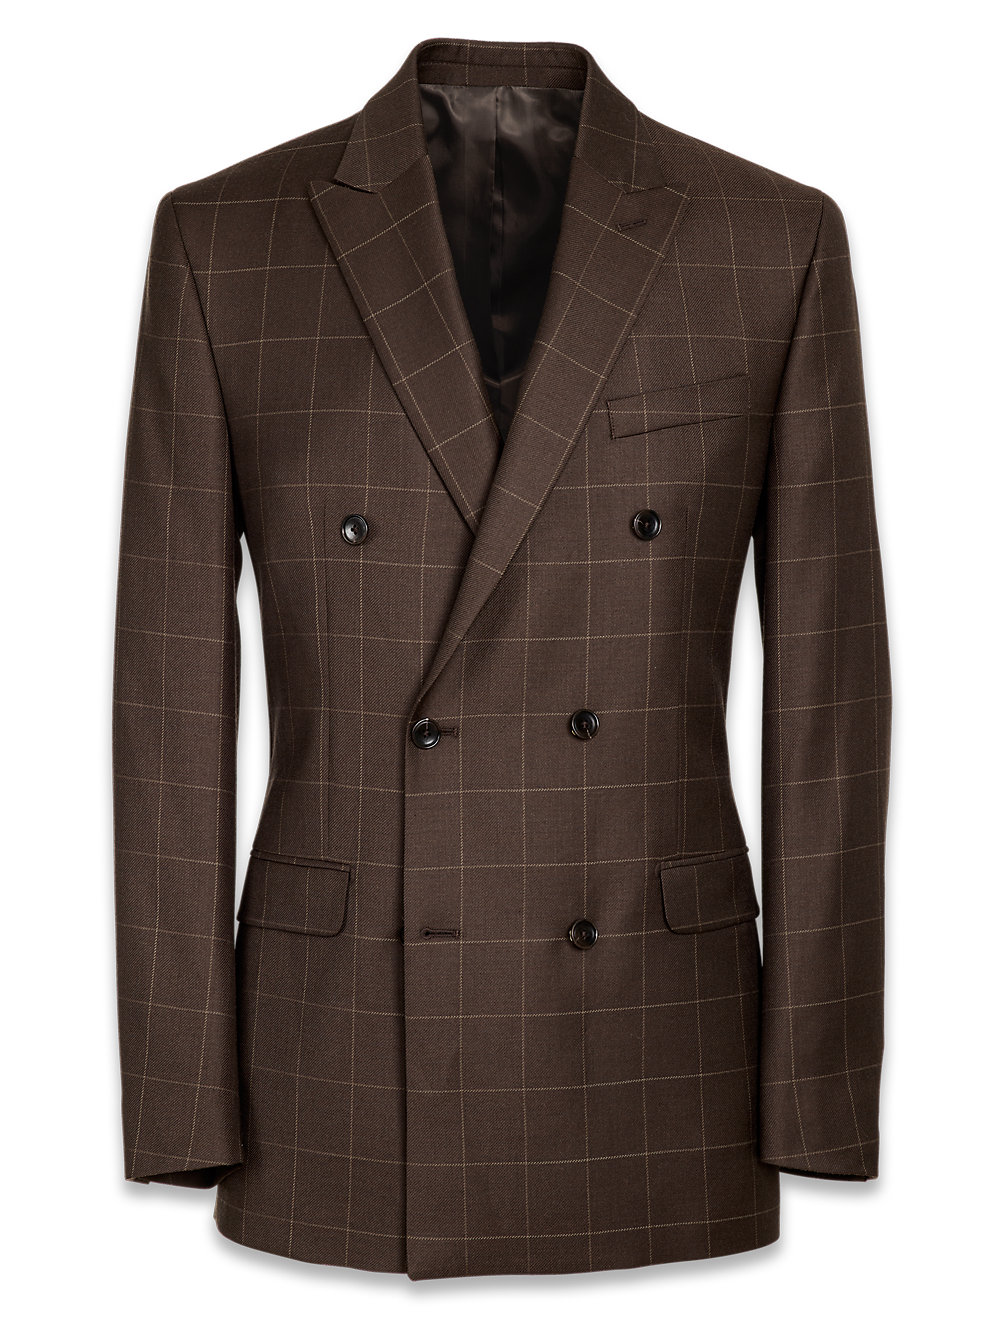 Paul Fredrick Mens Tailored Fit Wool Houndstooth Peak Lapel Suit Jacket